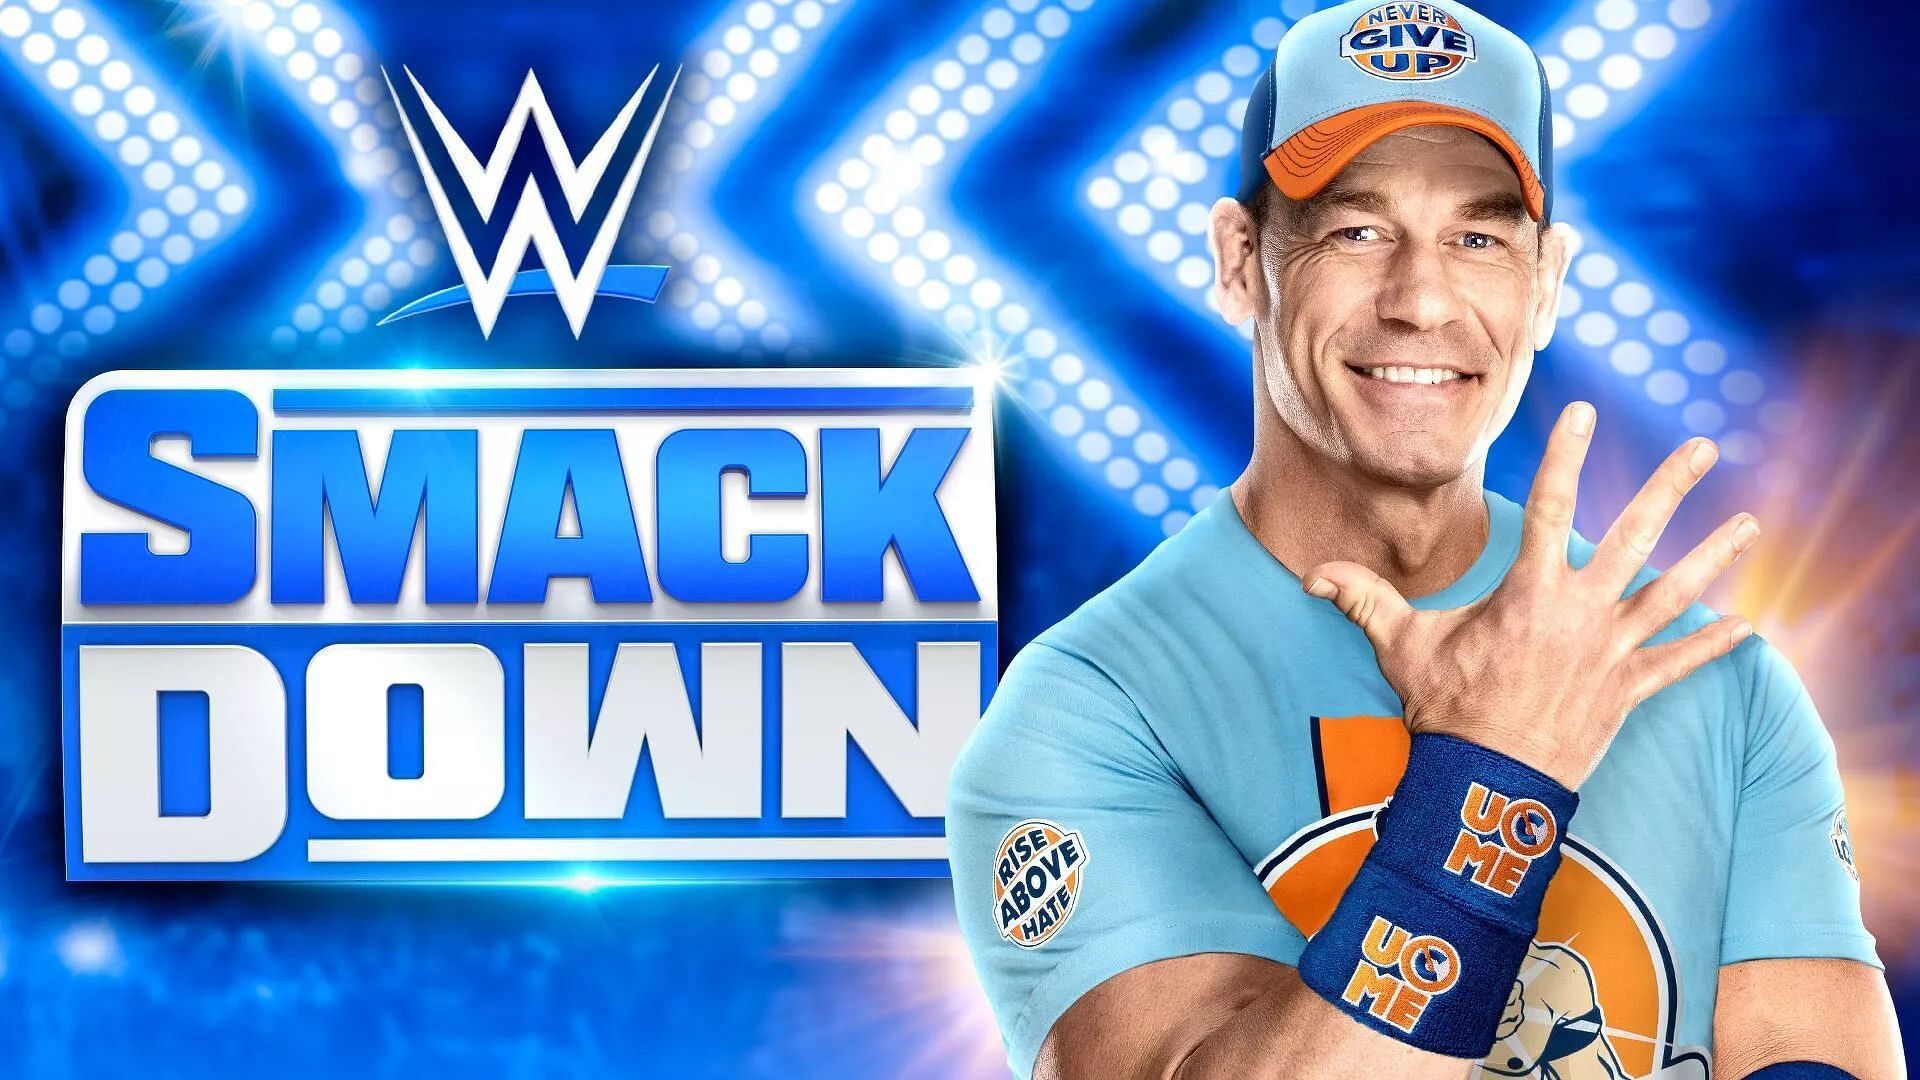 John Cena to permanently move to WWE SmackDown?